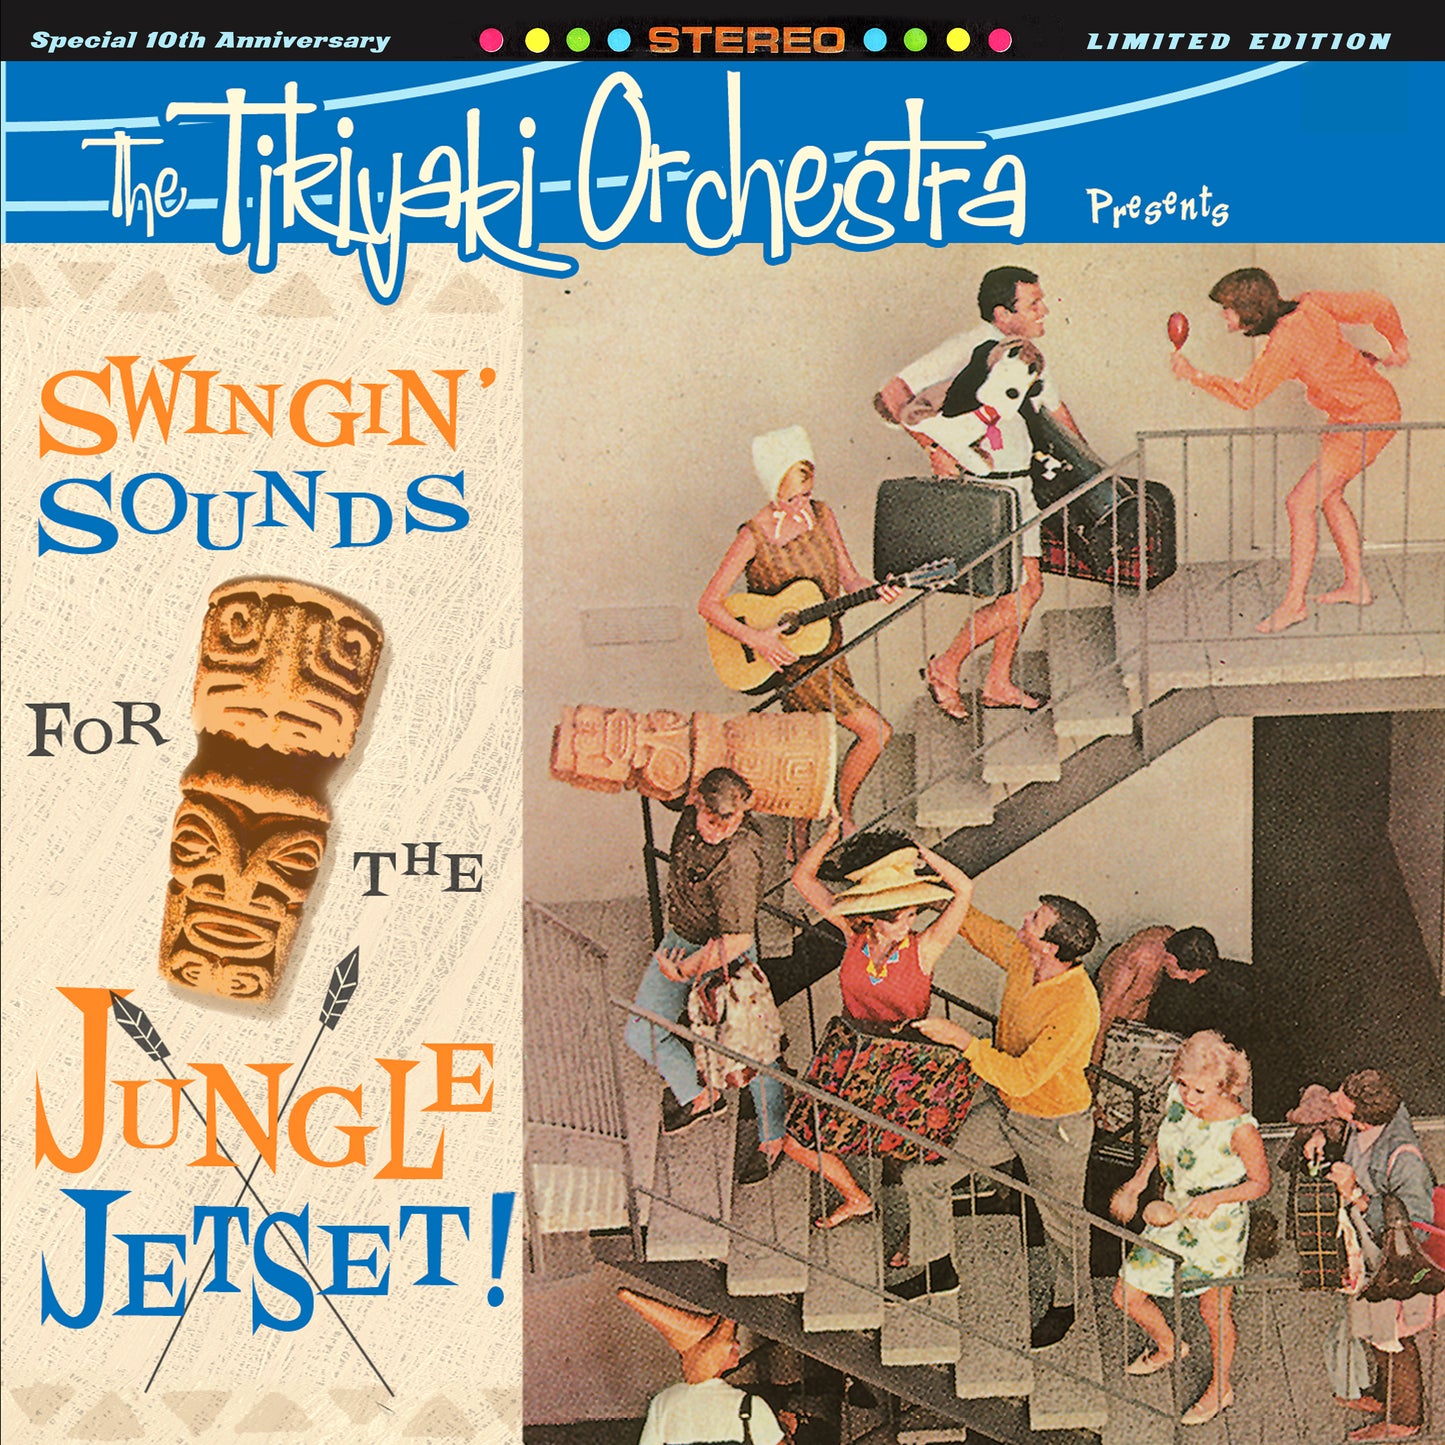 The Tikiyaki Orchestra "Swingin' Sounds For the Jungle Jetset!" LP